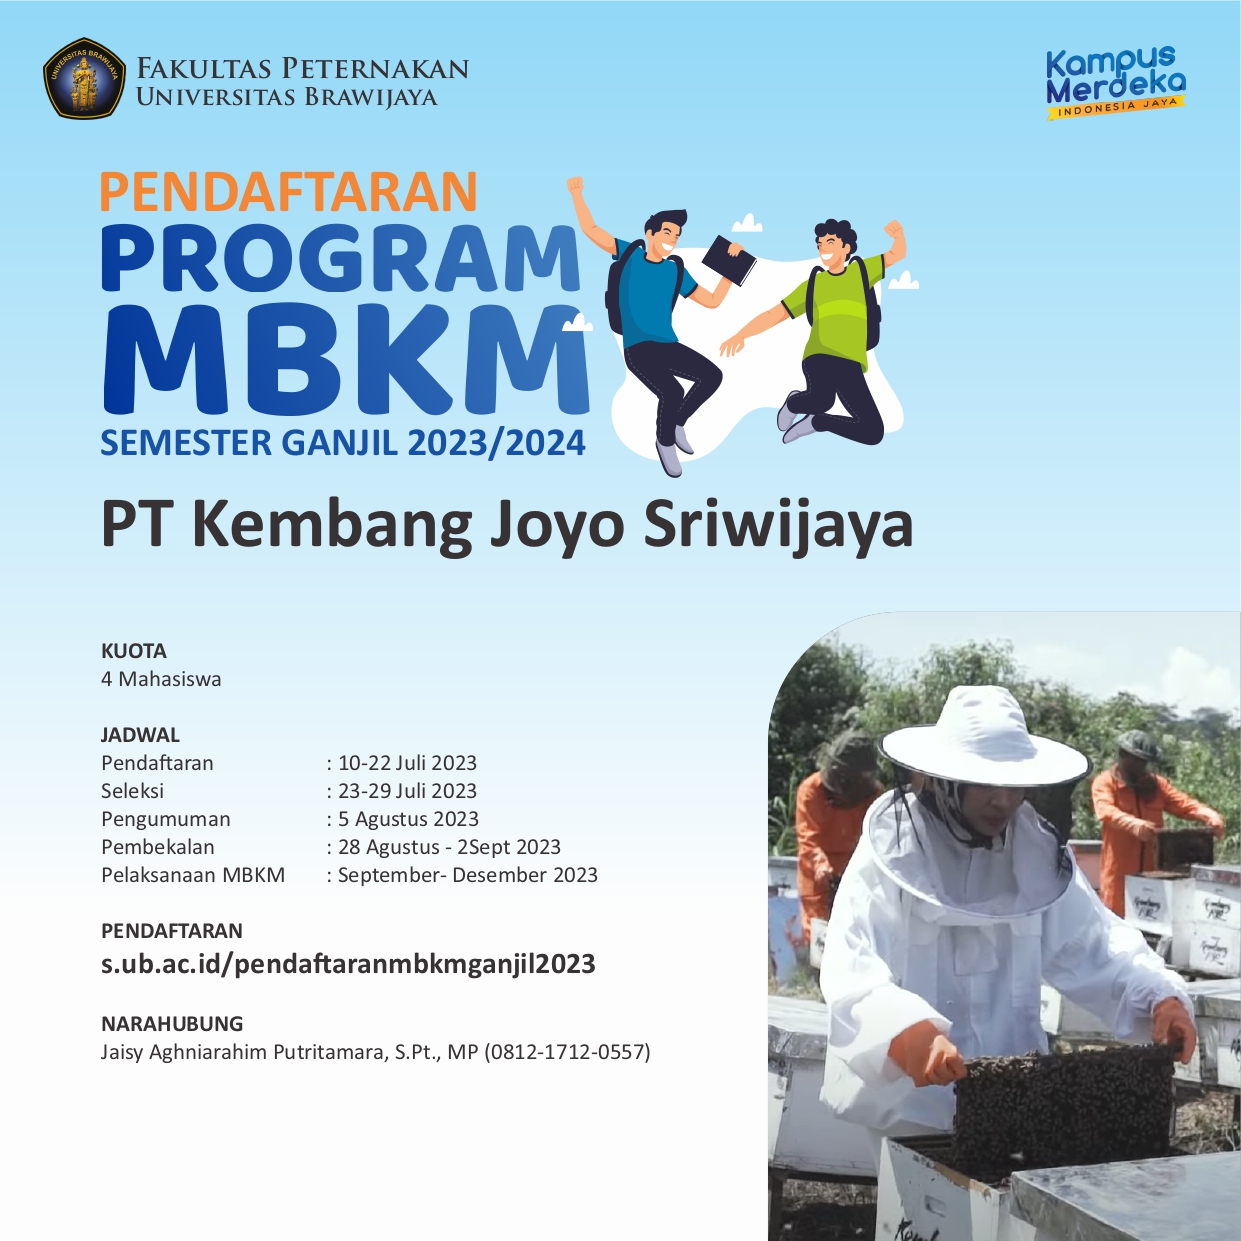 Registration of MBKM PT Kembang Joyo Sriwijaya